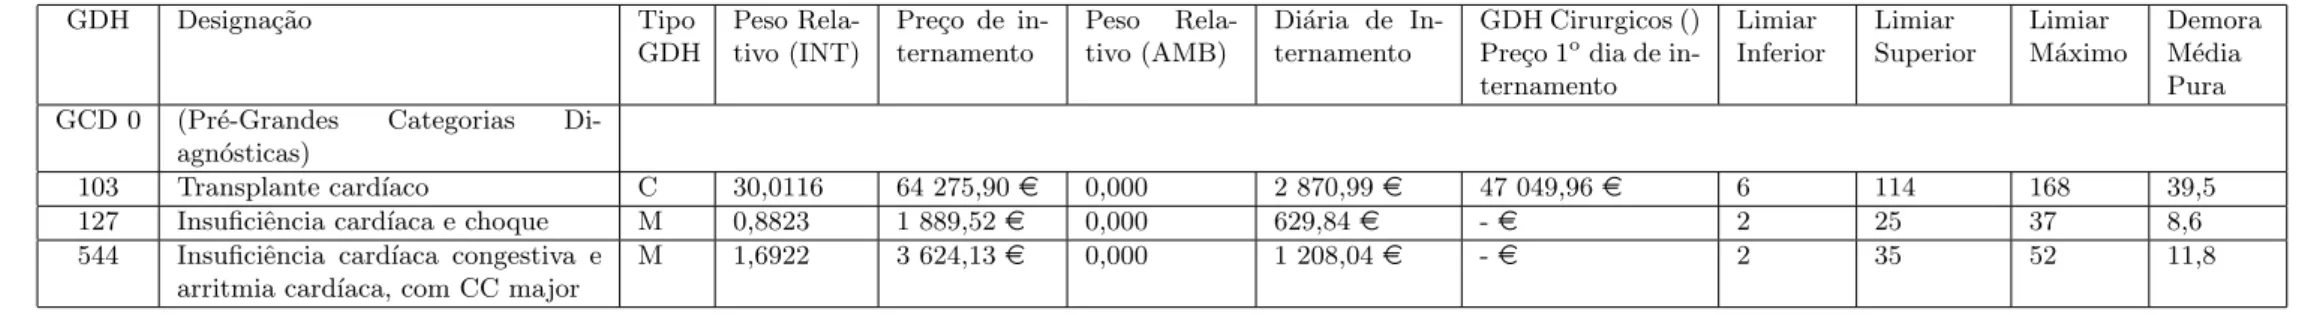 Tabela 1: Parcela da Tabela Nacional de Grupos de Diagn´ostico Homog´eneo GDH Designa¸c˜ ao Tipo GDH Peso Rela-tivo (INT) Pre¸co de in-ternamento Peso Rela-tivo (AMB)